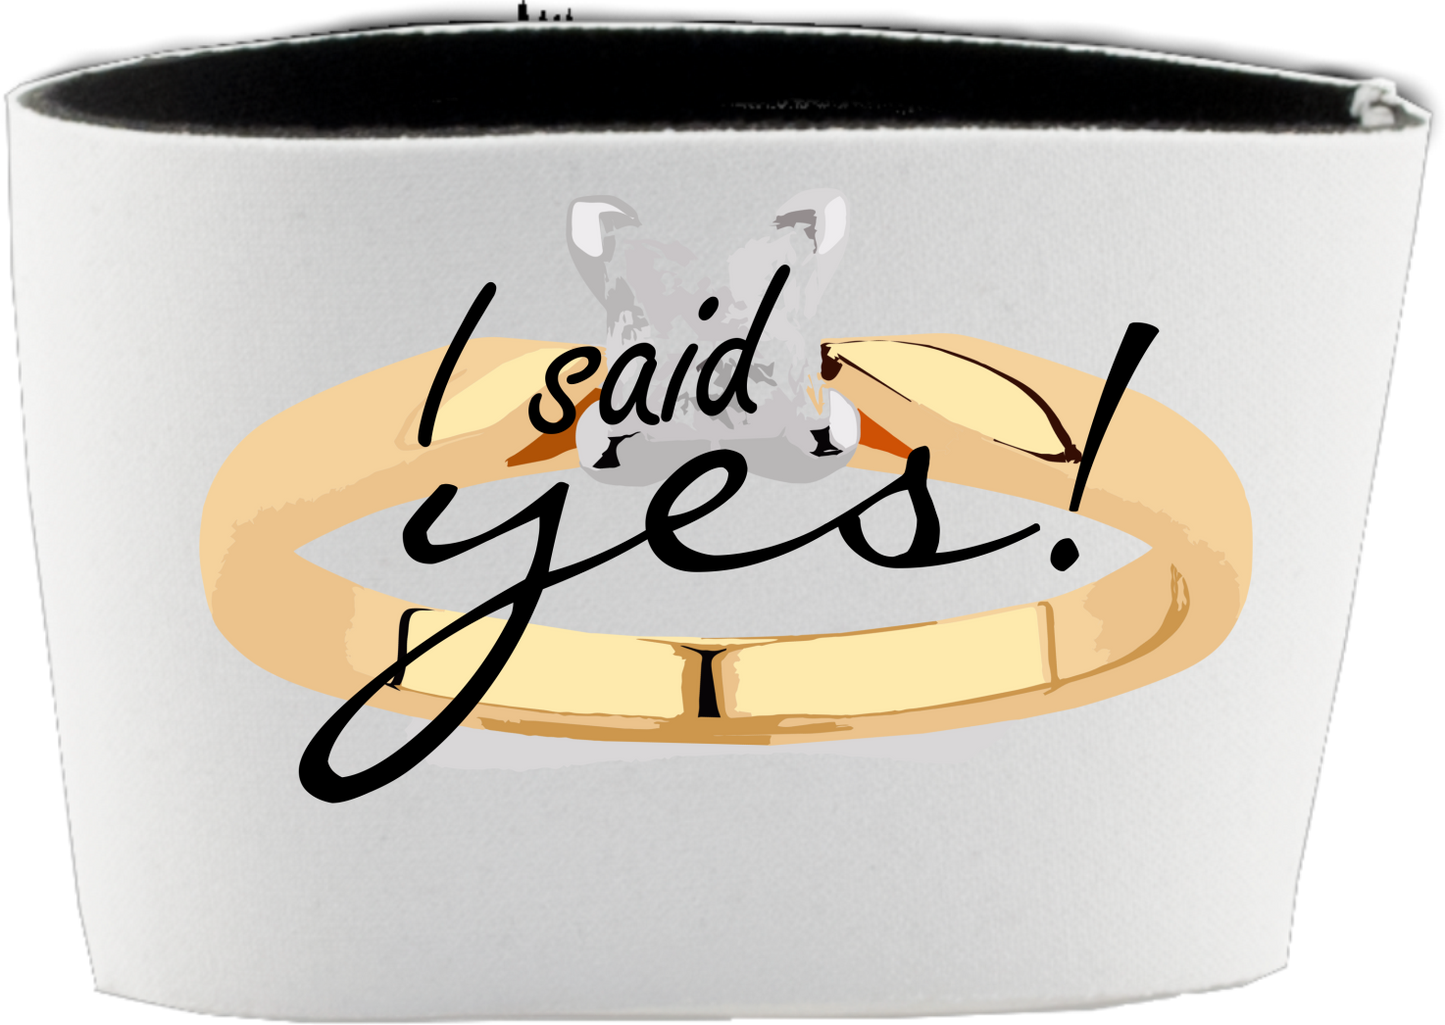 I Said Yes!